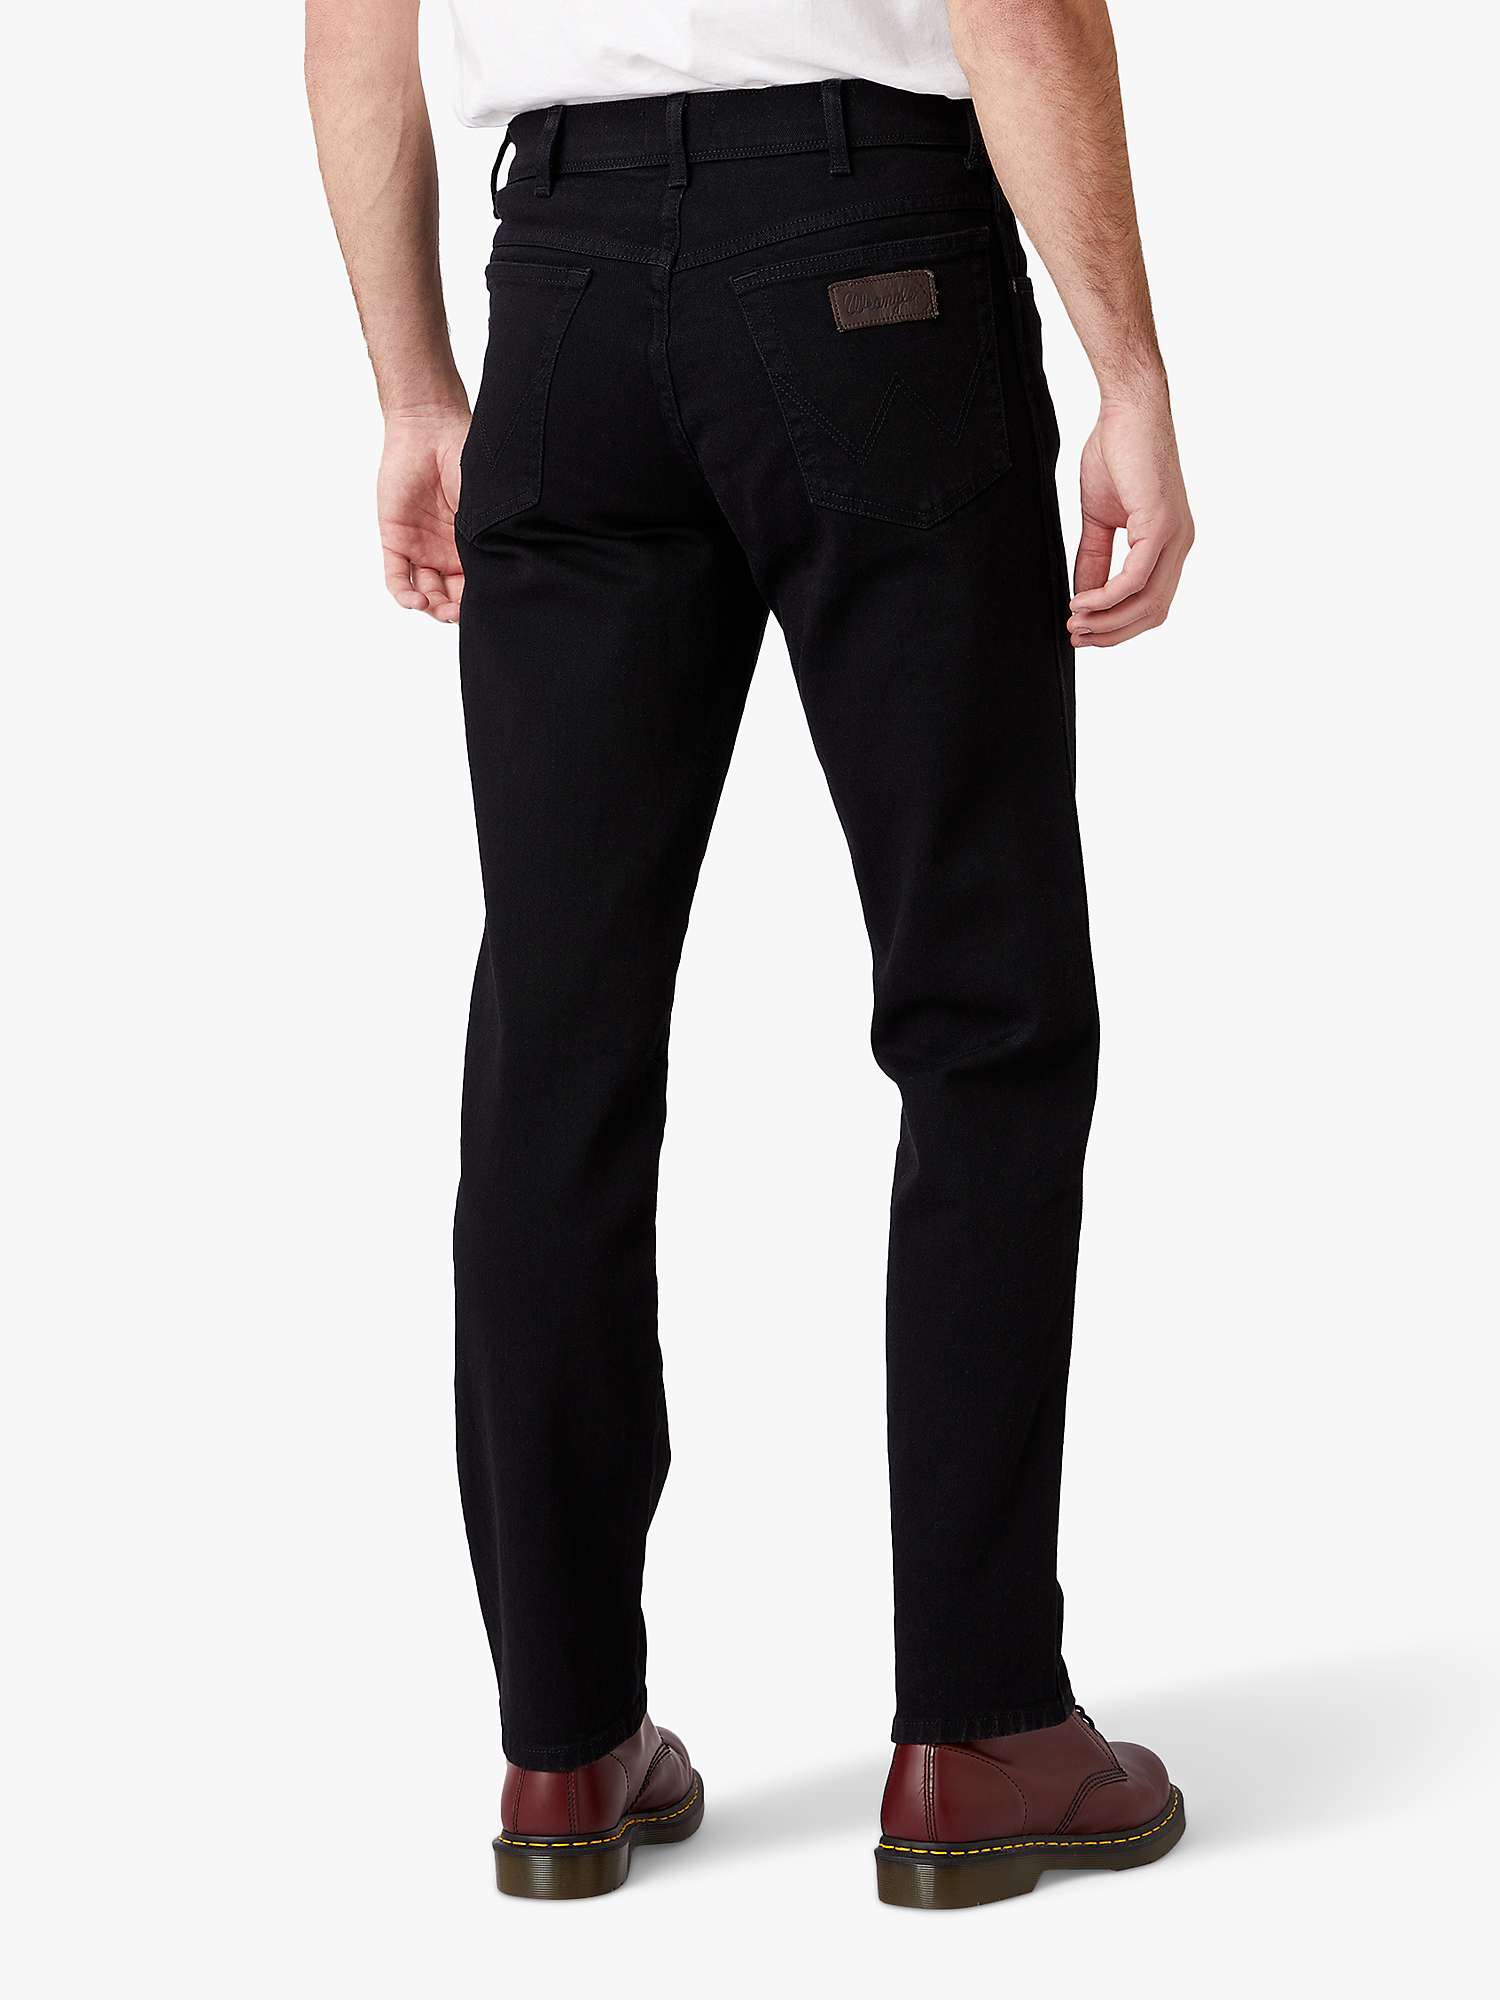 Wrangler Regular Fit Jeans, Black at John Lewis & Partners